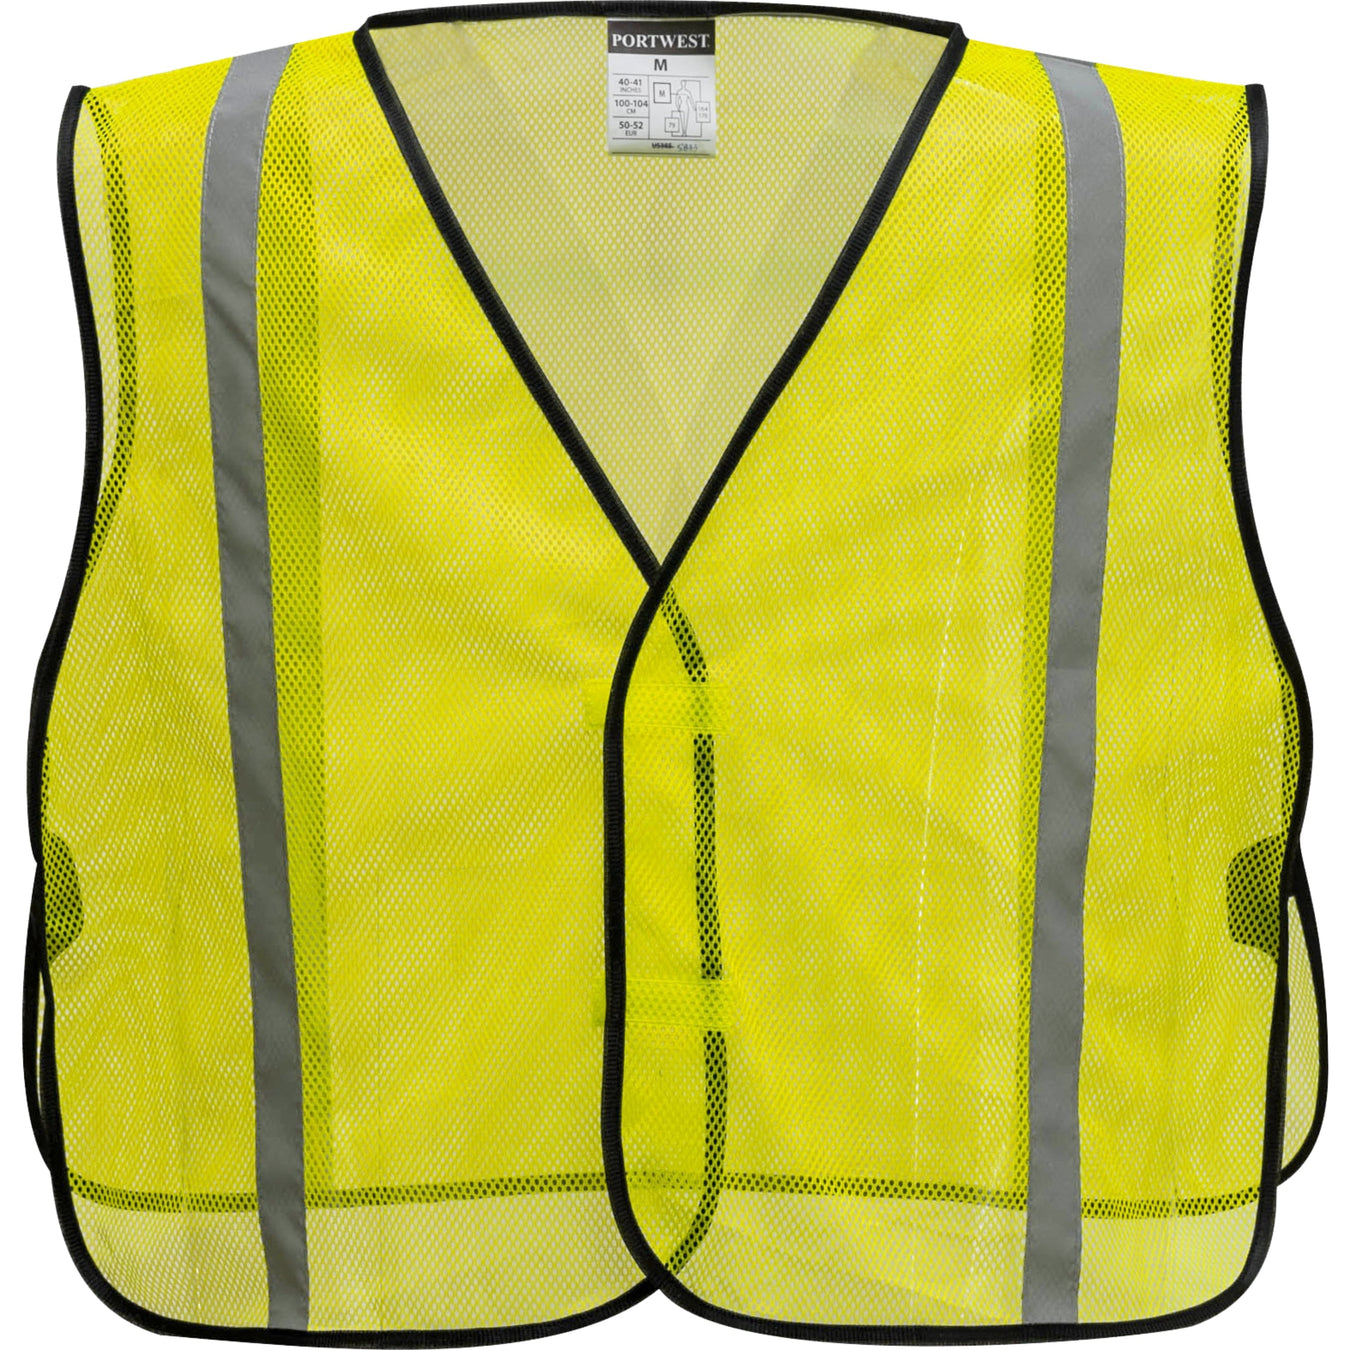 Construction Safety Vests